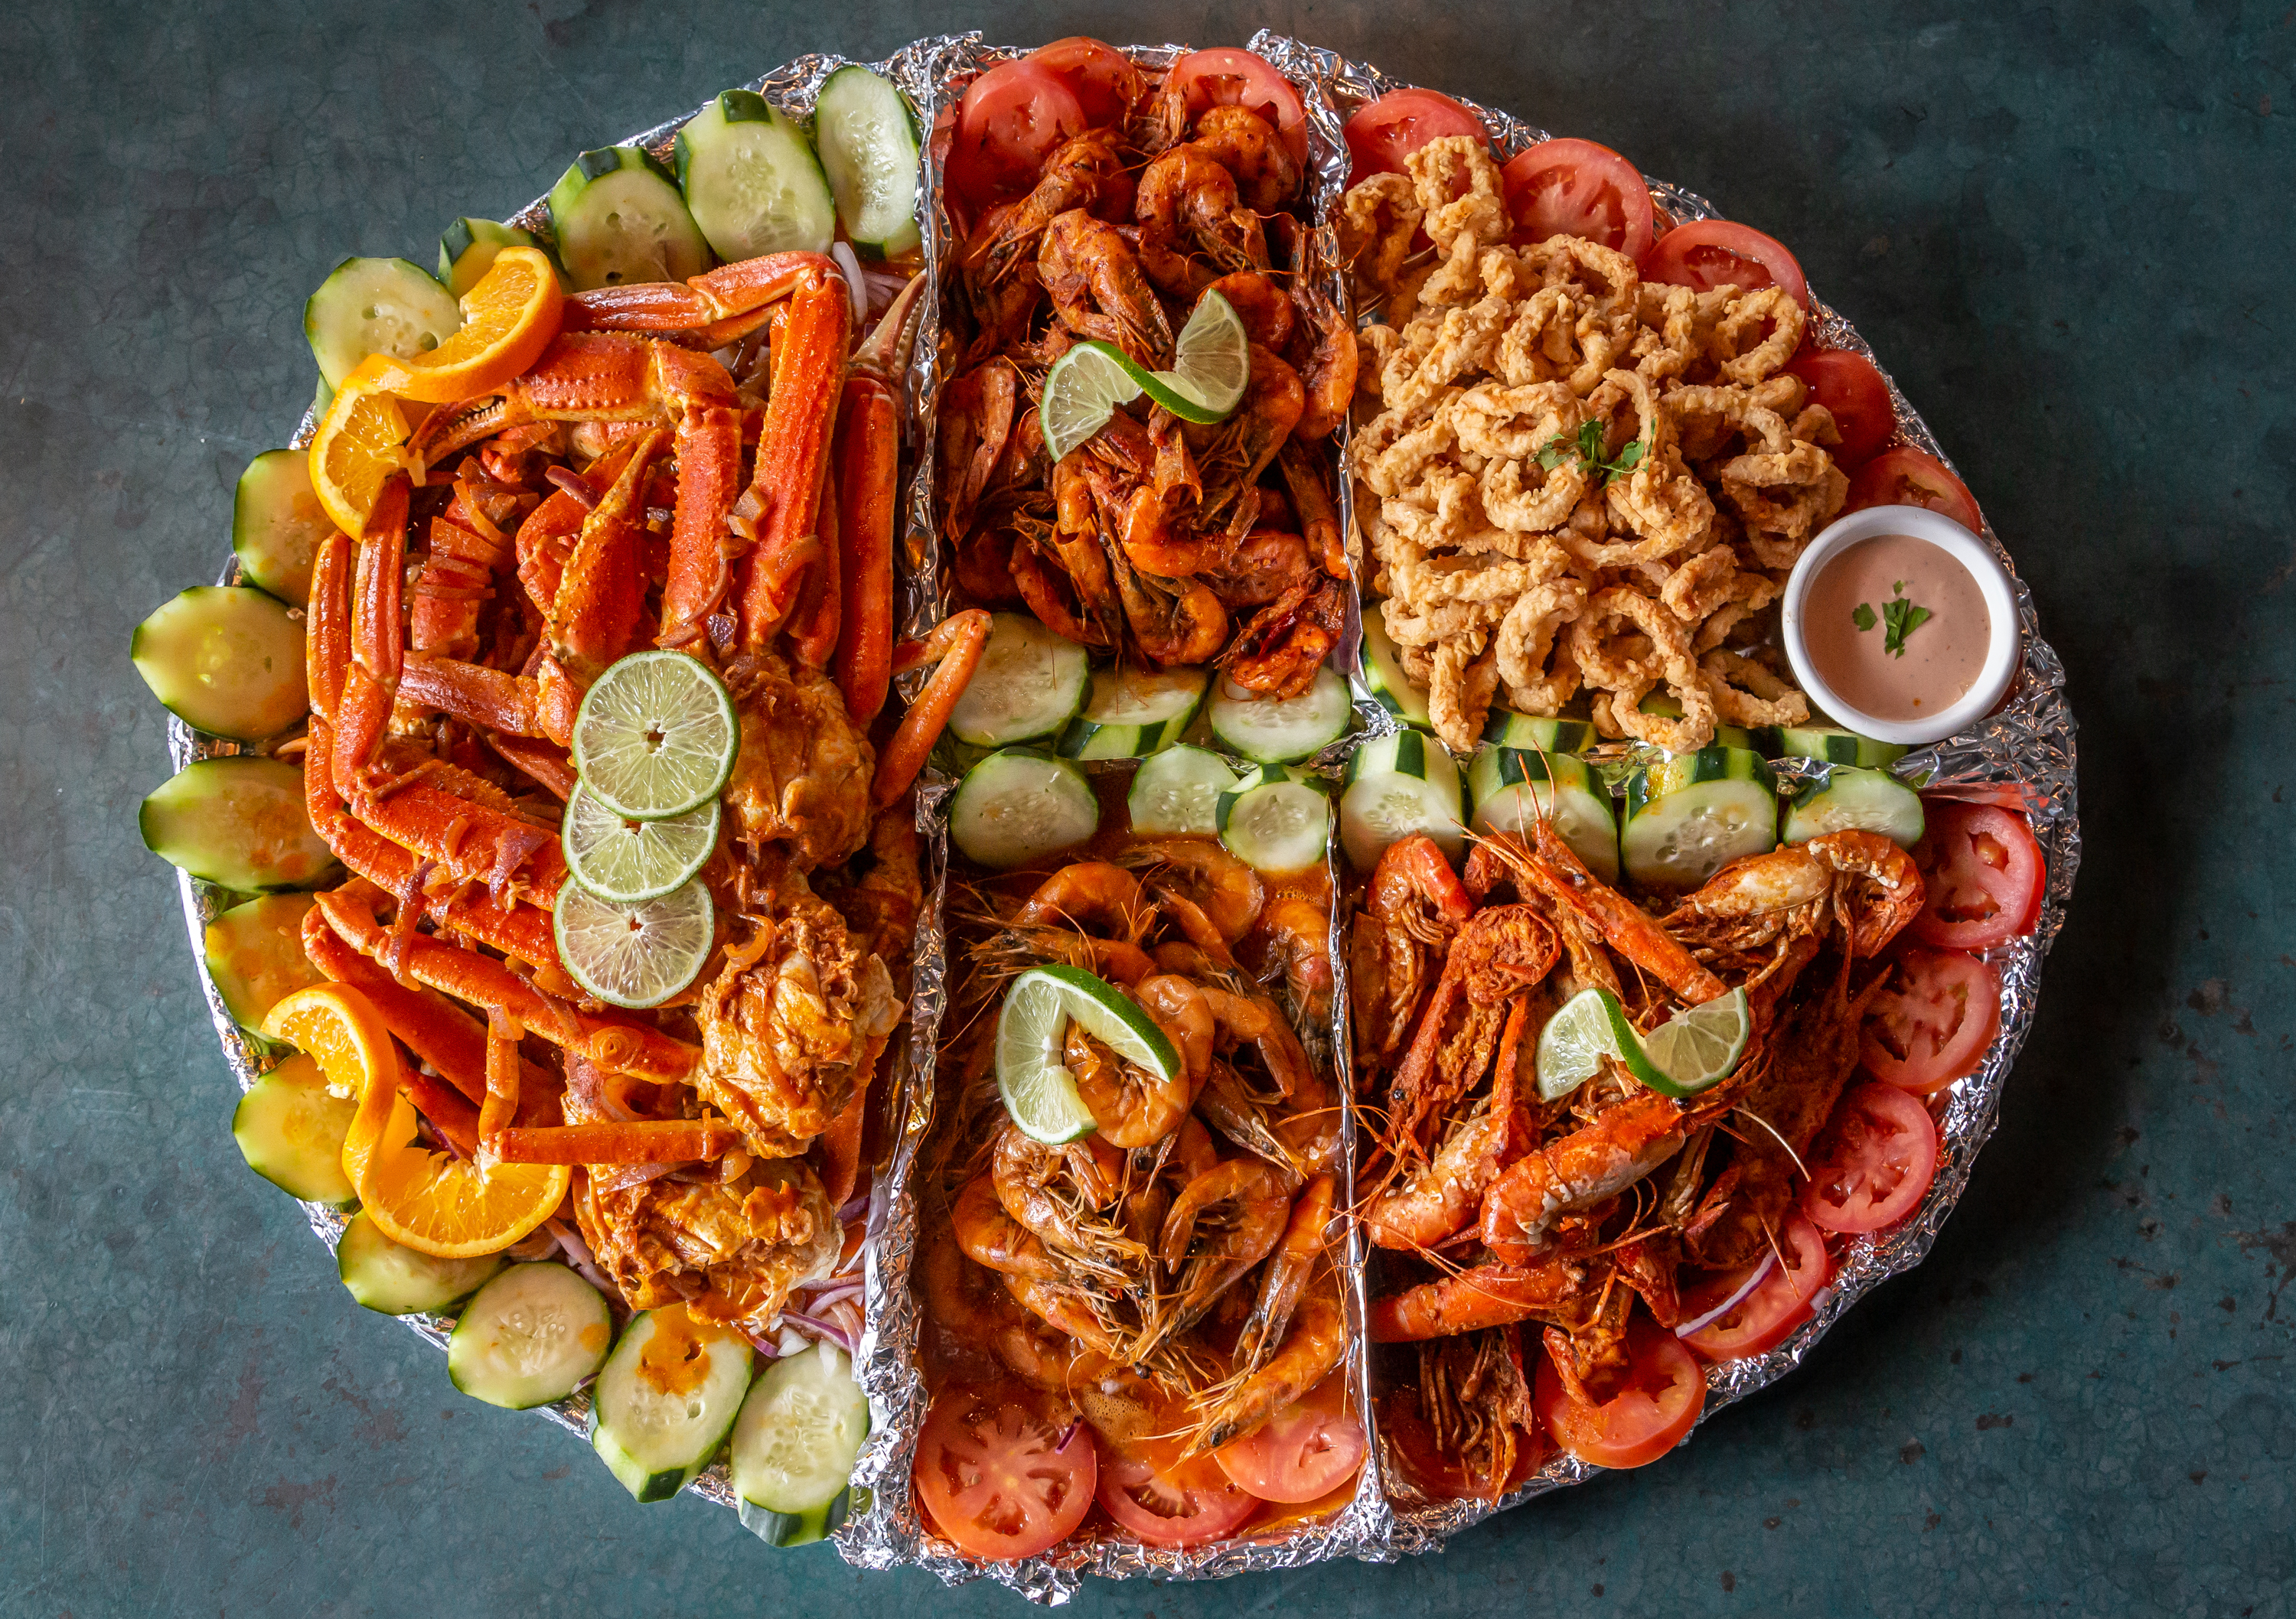 The charola platter with crab legs, langoustines, shrimp, clams, and fried fish at Mariscos La Riviera Nayarit